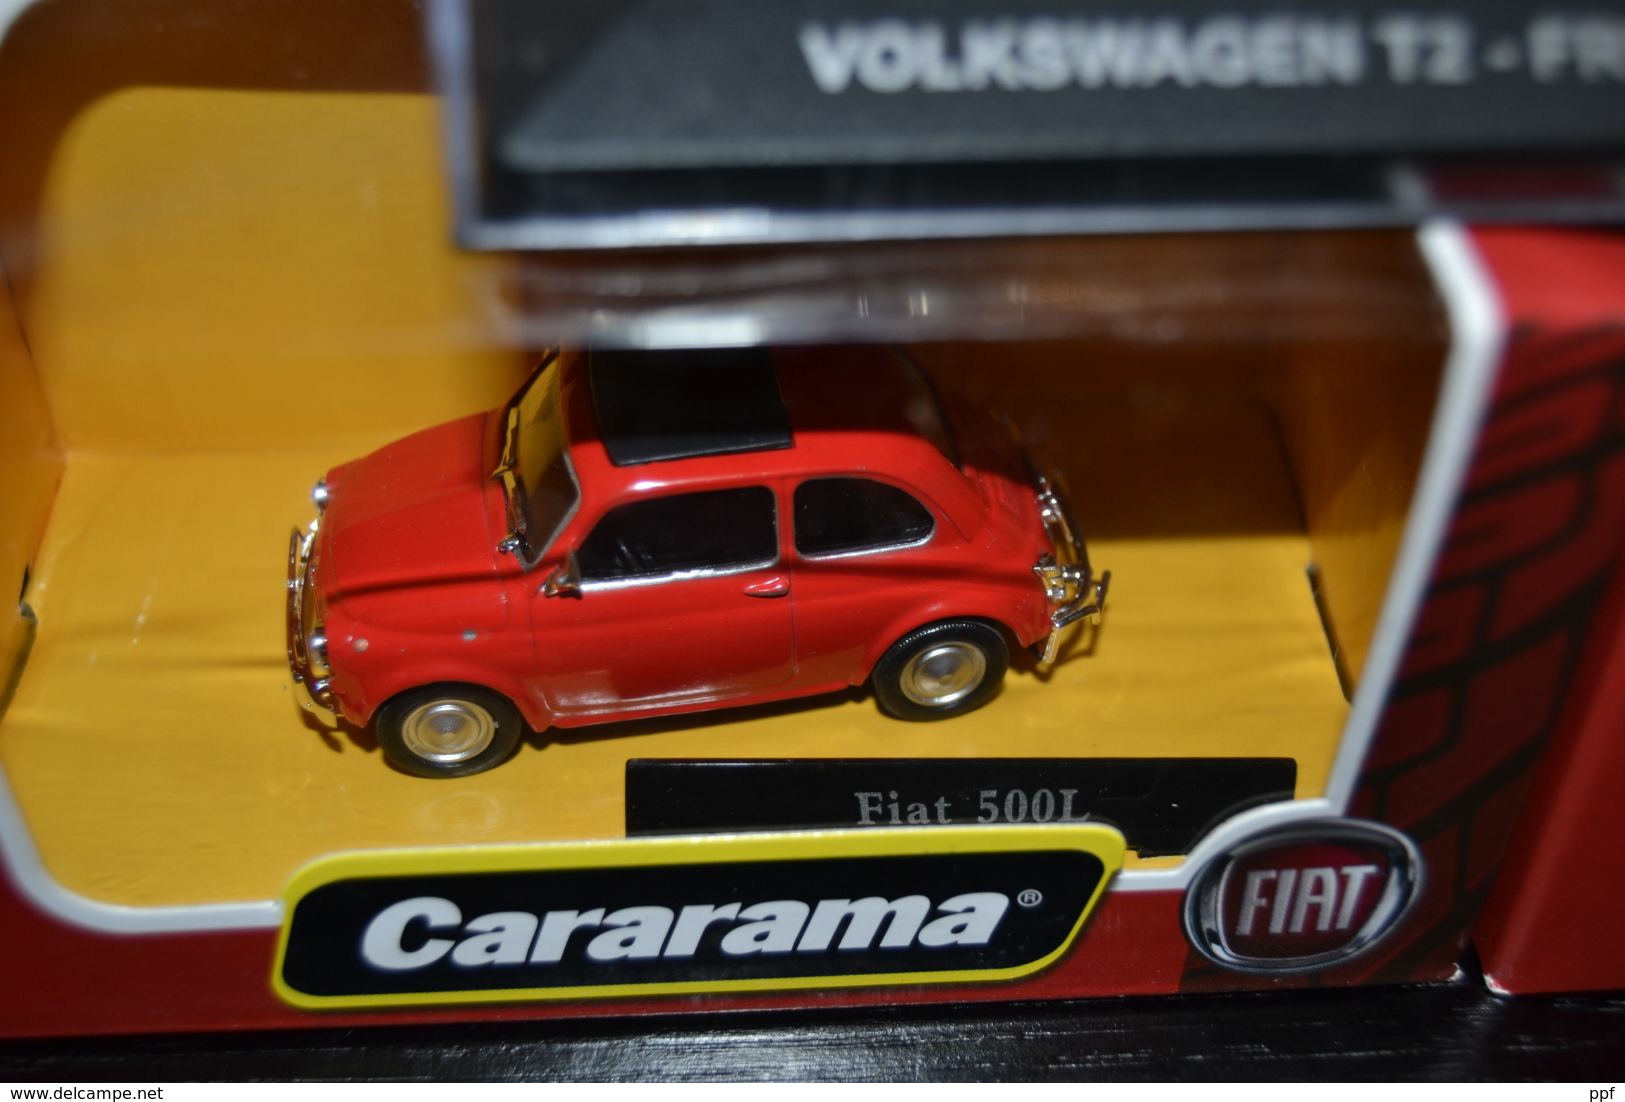 Fiat 500 Cararama, Nuova In Scatola. - Cararama (Oliex)